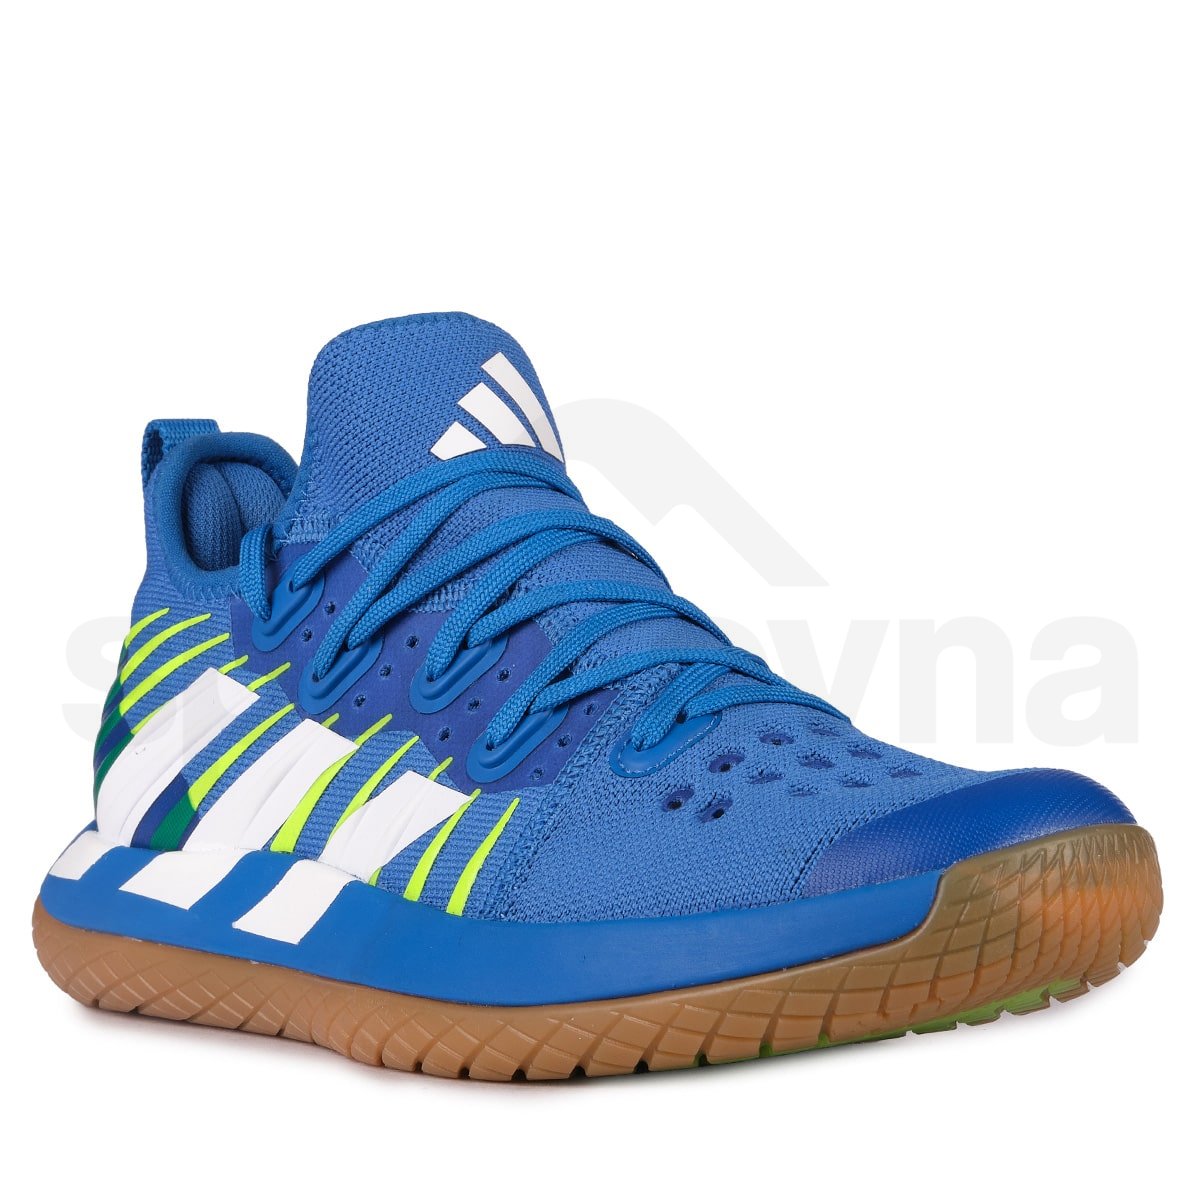 Obuv Adidas Stabil Next Gen M - modrá/bílá/zelená